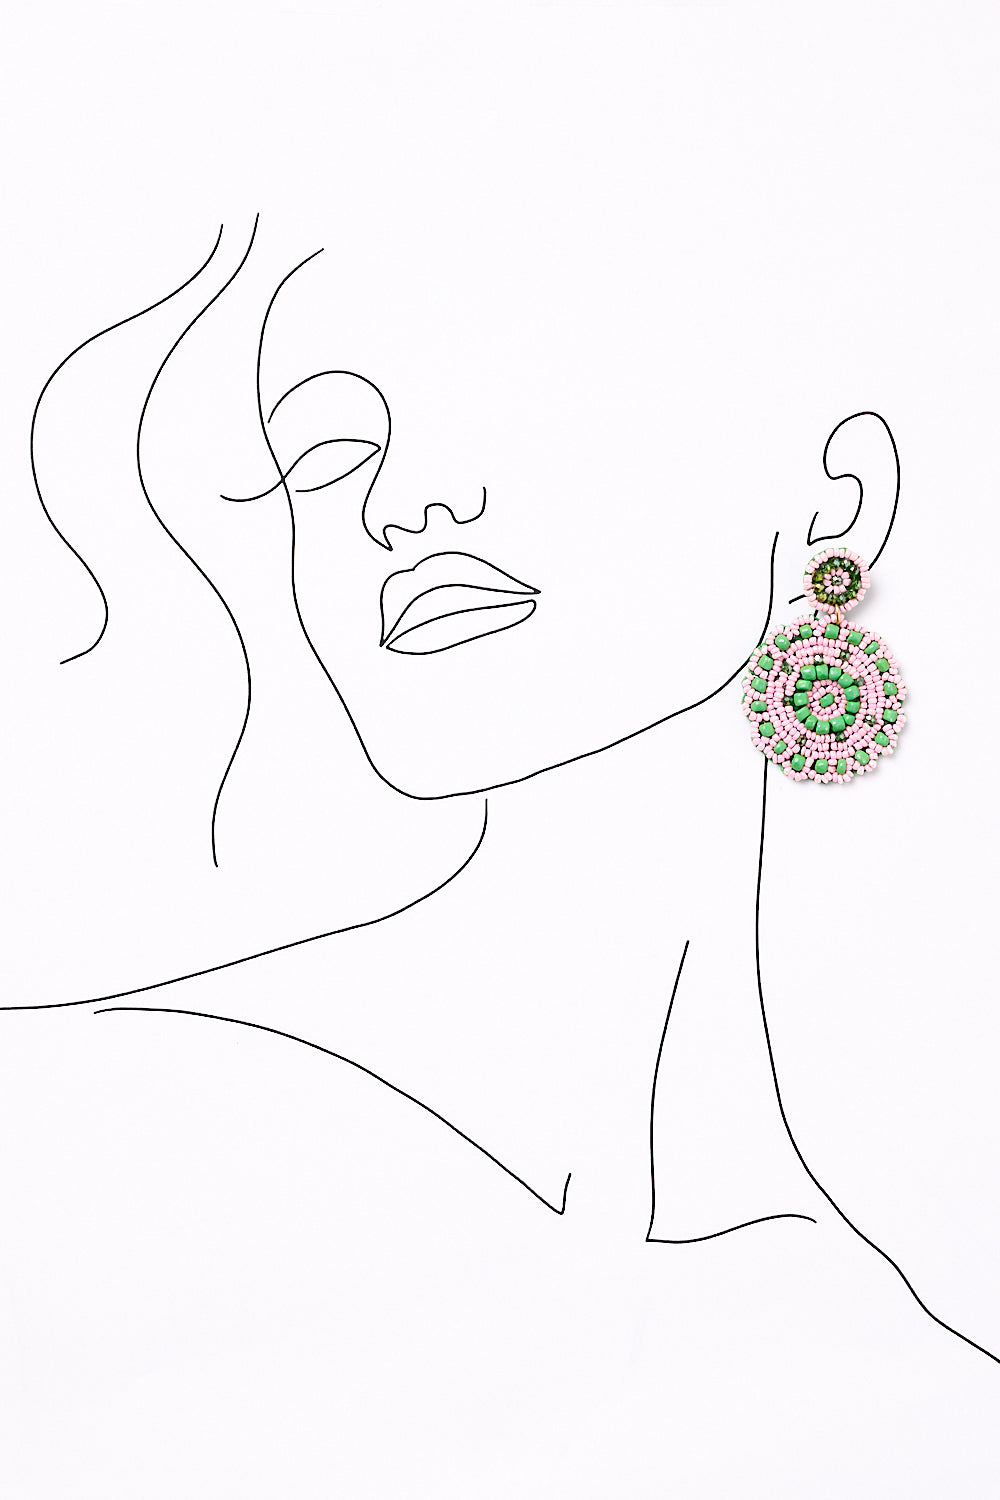 Boho Beaded Earrings in Pink and Green